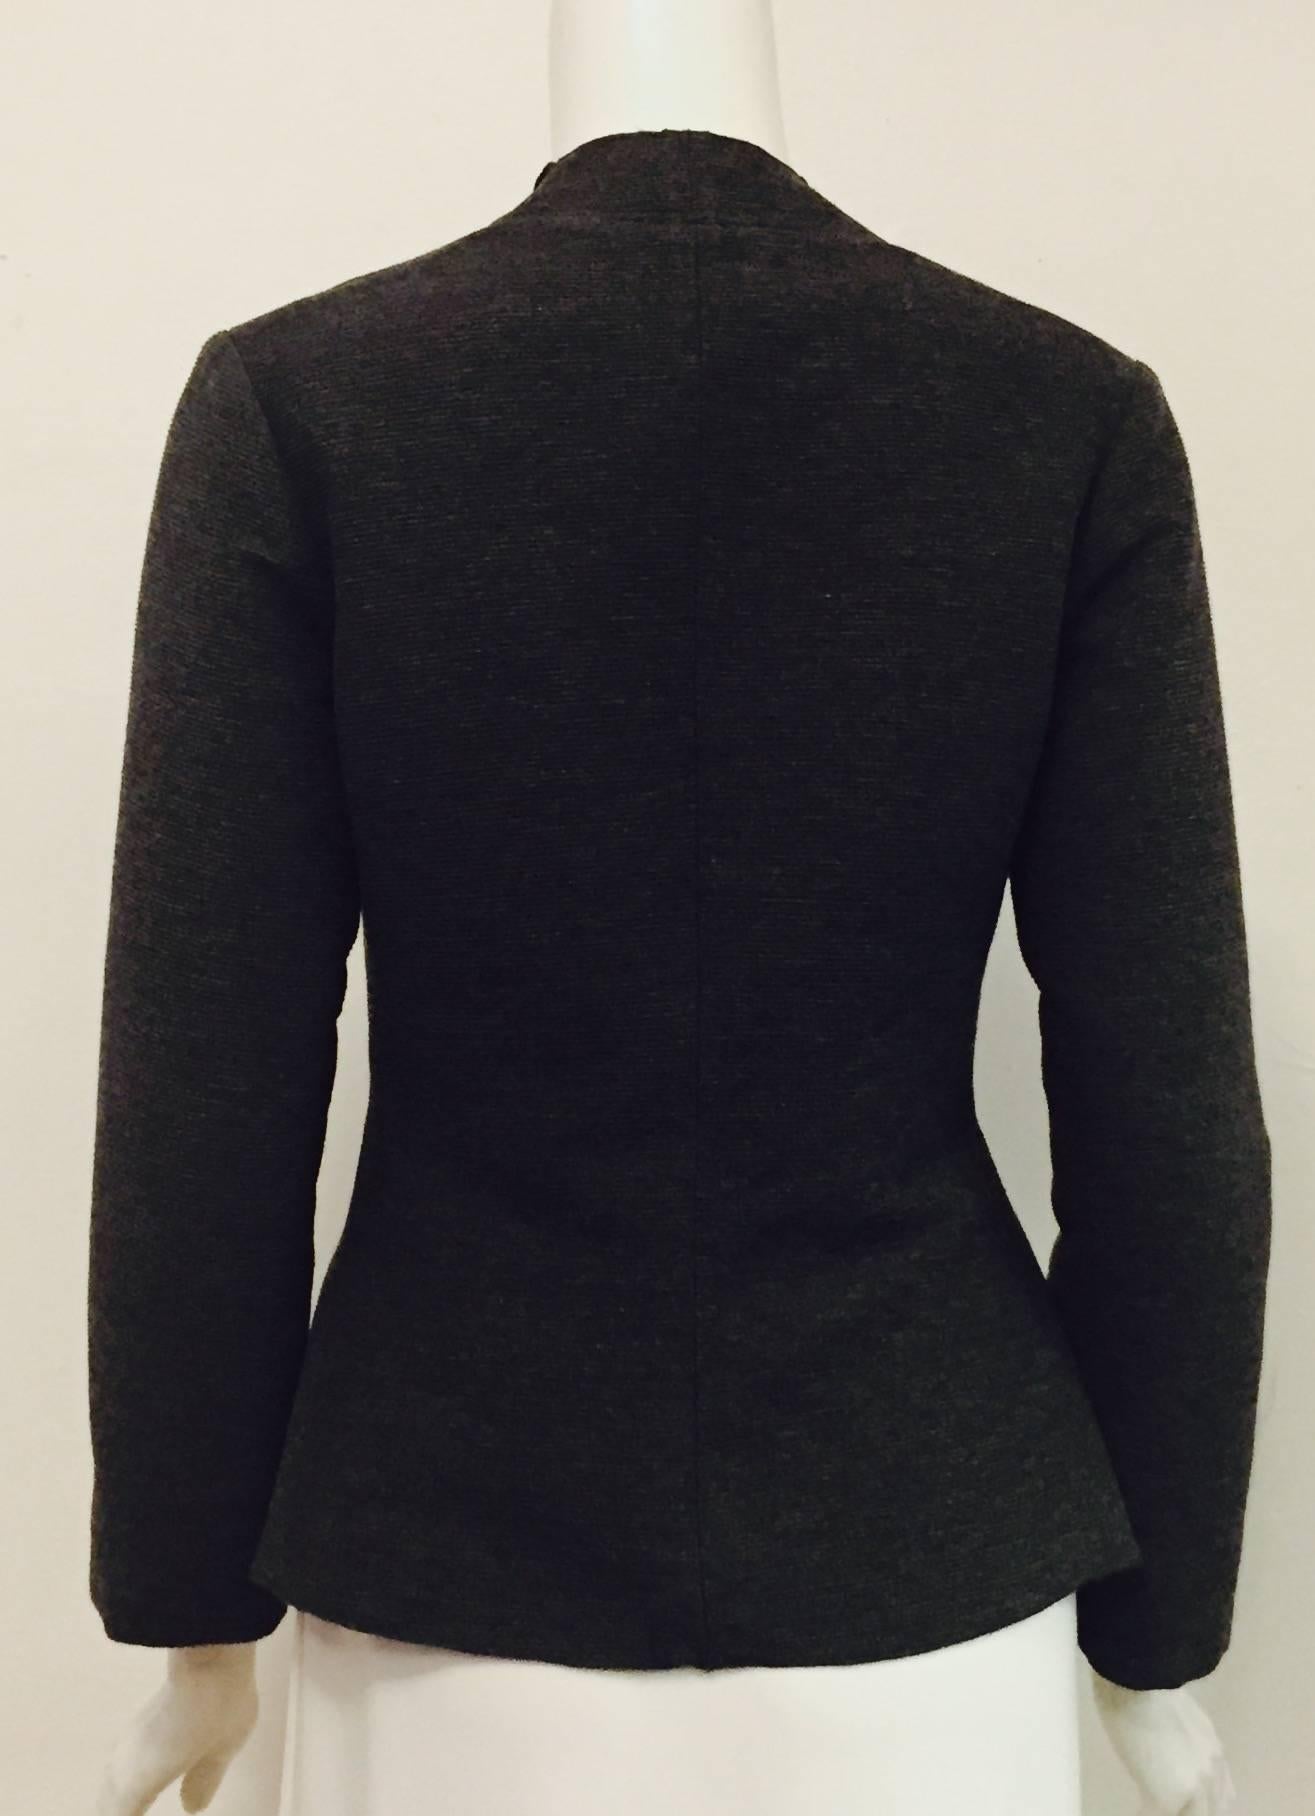 Black Luscious Lanvin Grey Flirty Jacket with Ruffles & Long Sleeves a True Heritage